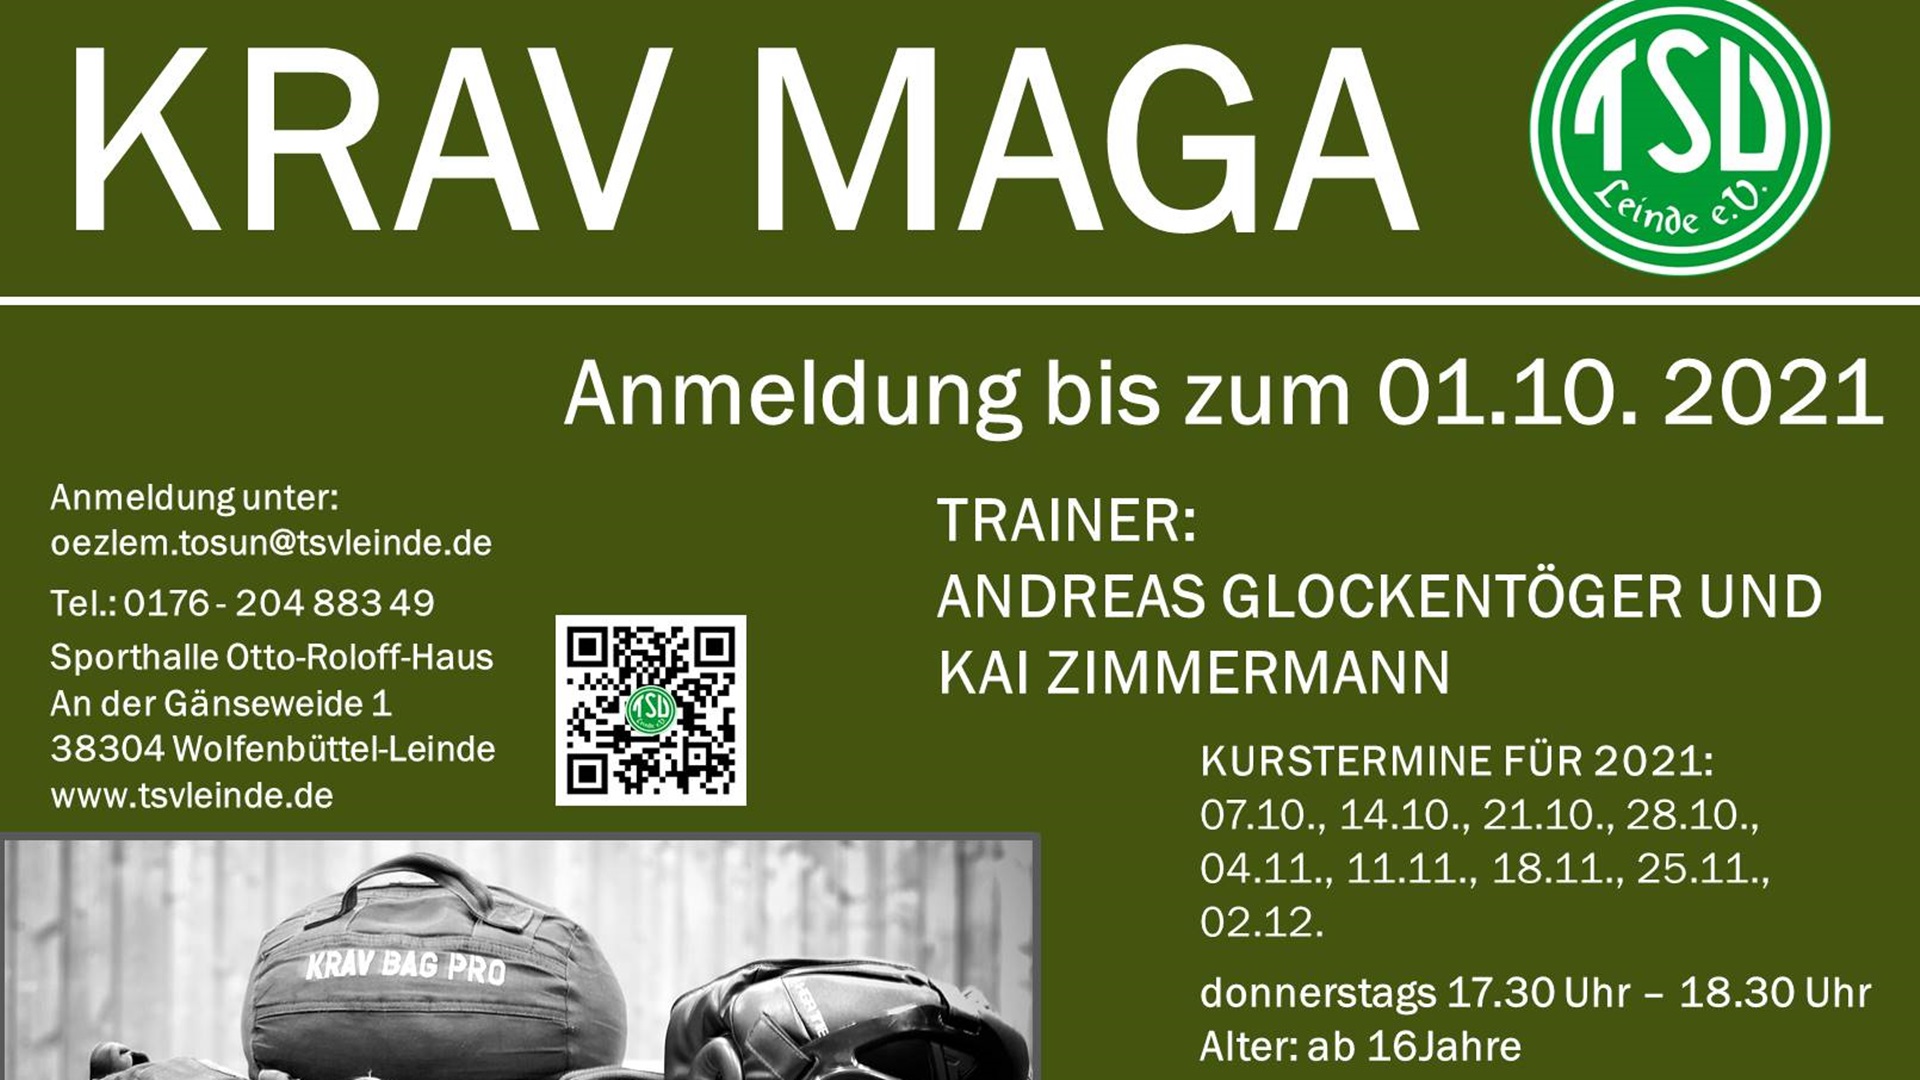 Plakat mit Termin-Informationen zum Krav Maga Kurs.